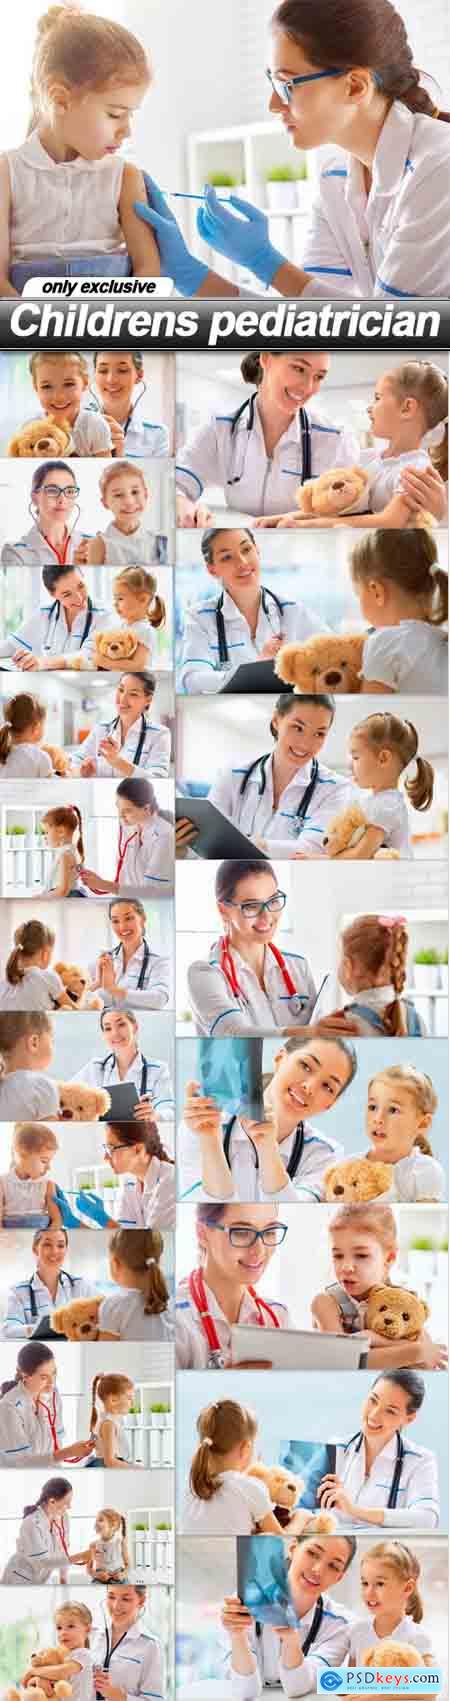 Childrens pediatrician - 20 UHQ JPEG